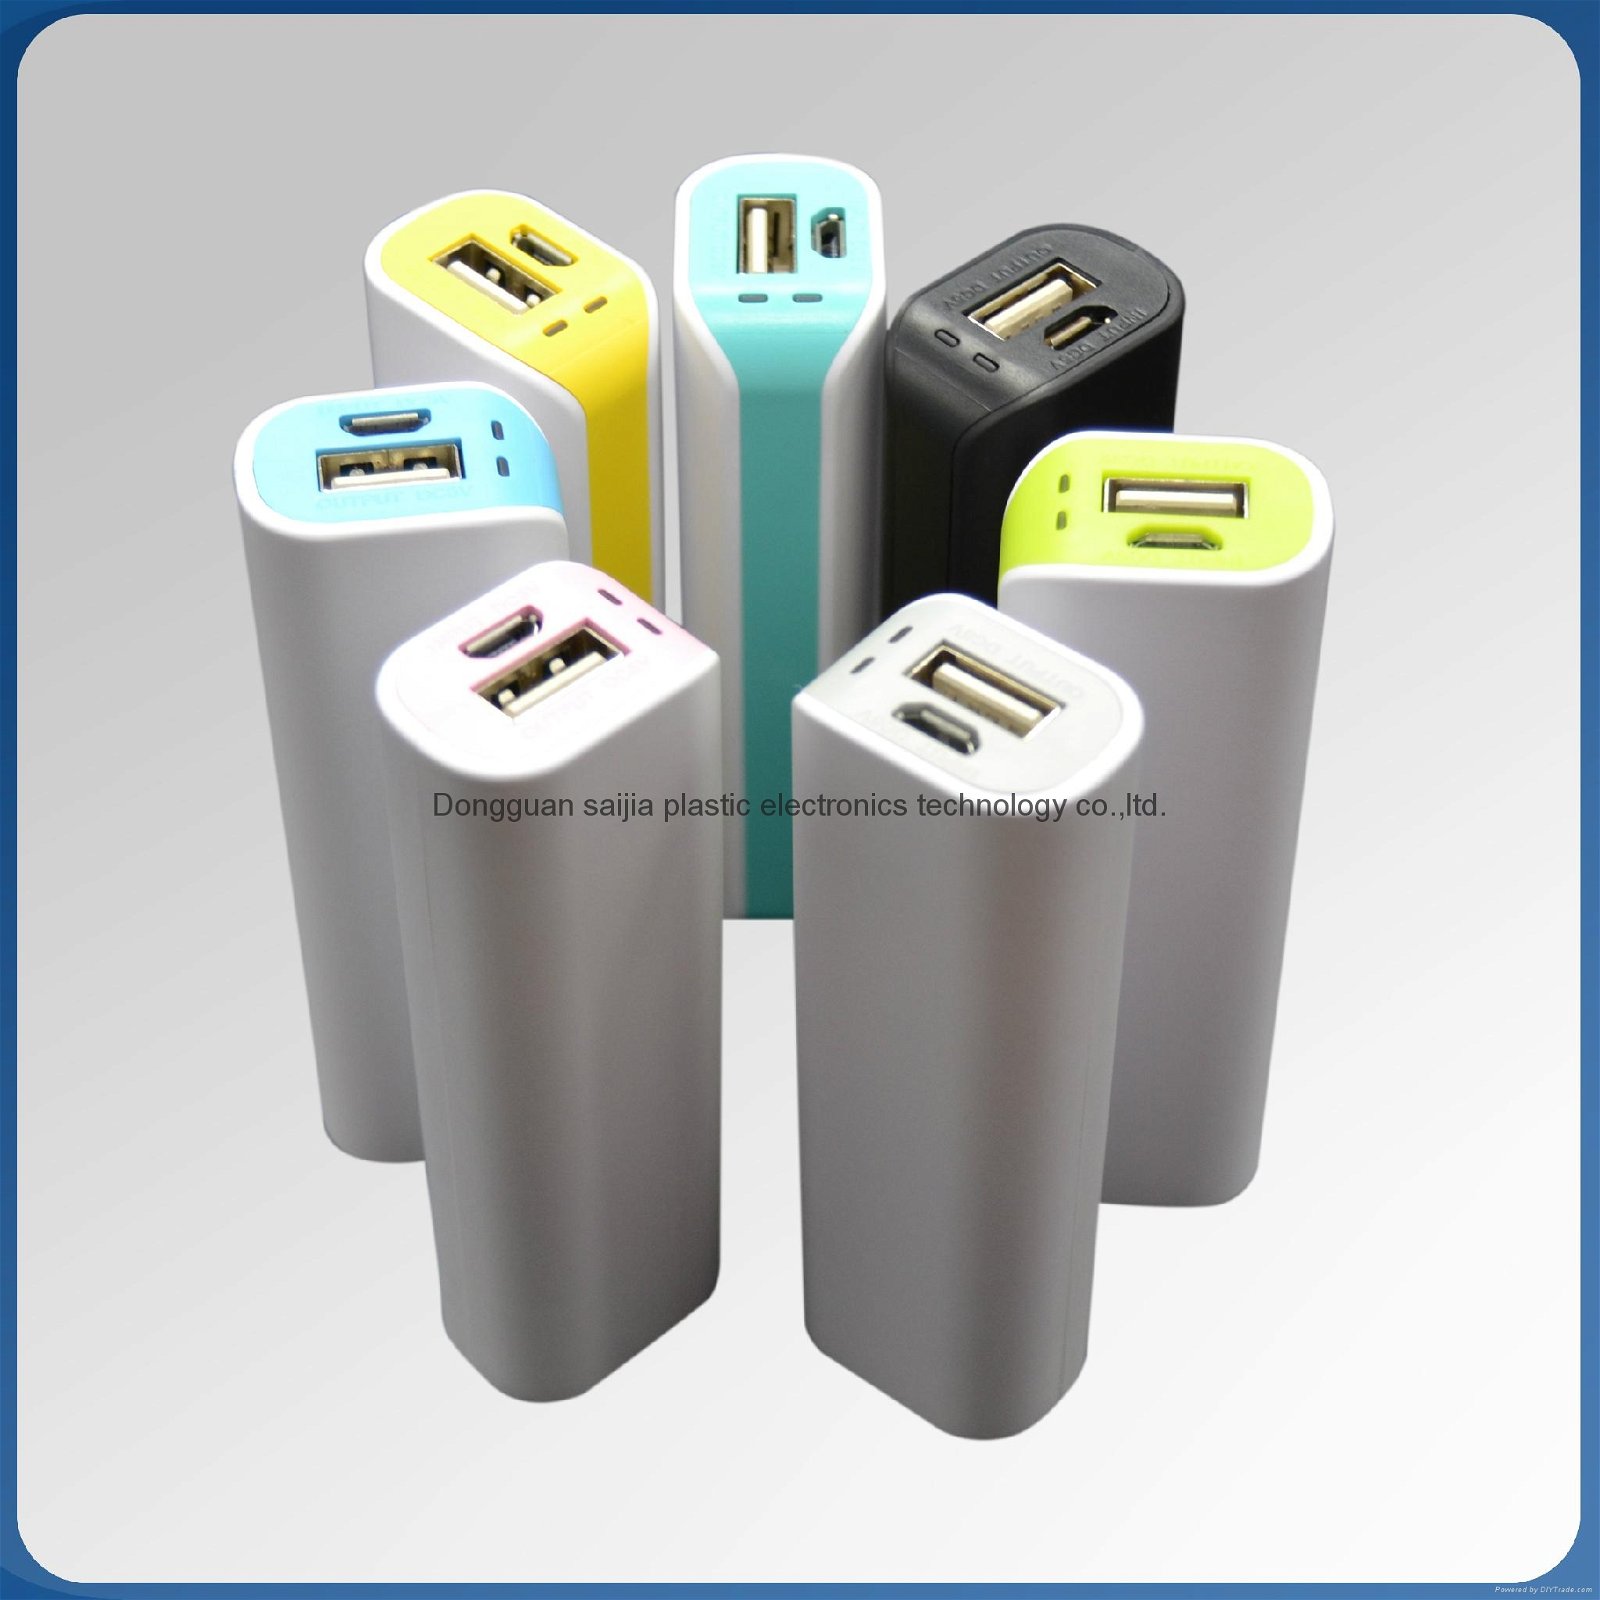 Potable external battery power bank for mobile phone